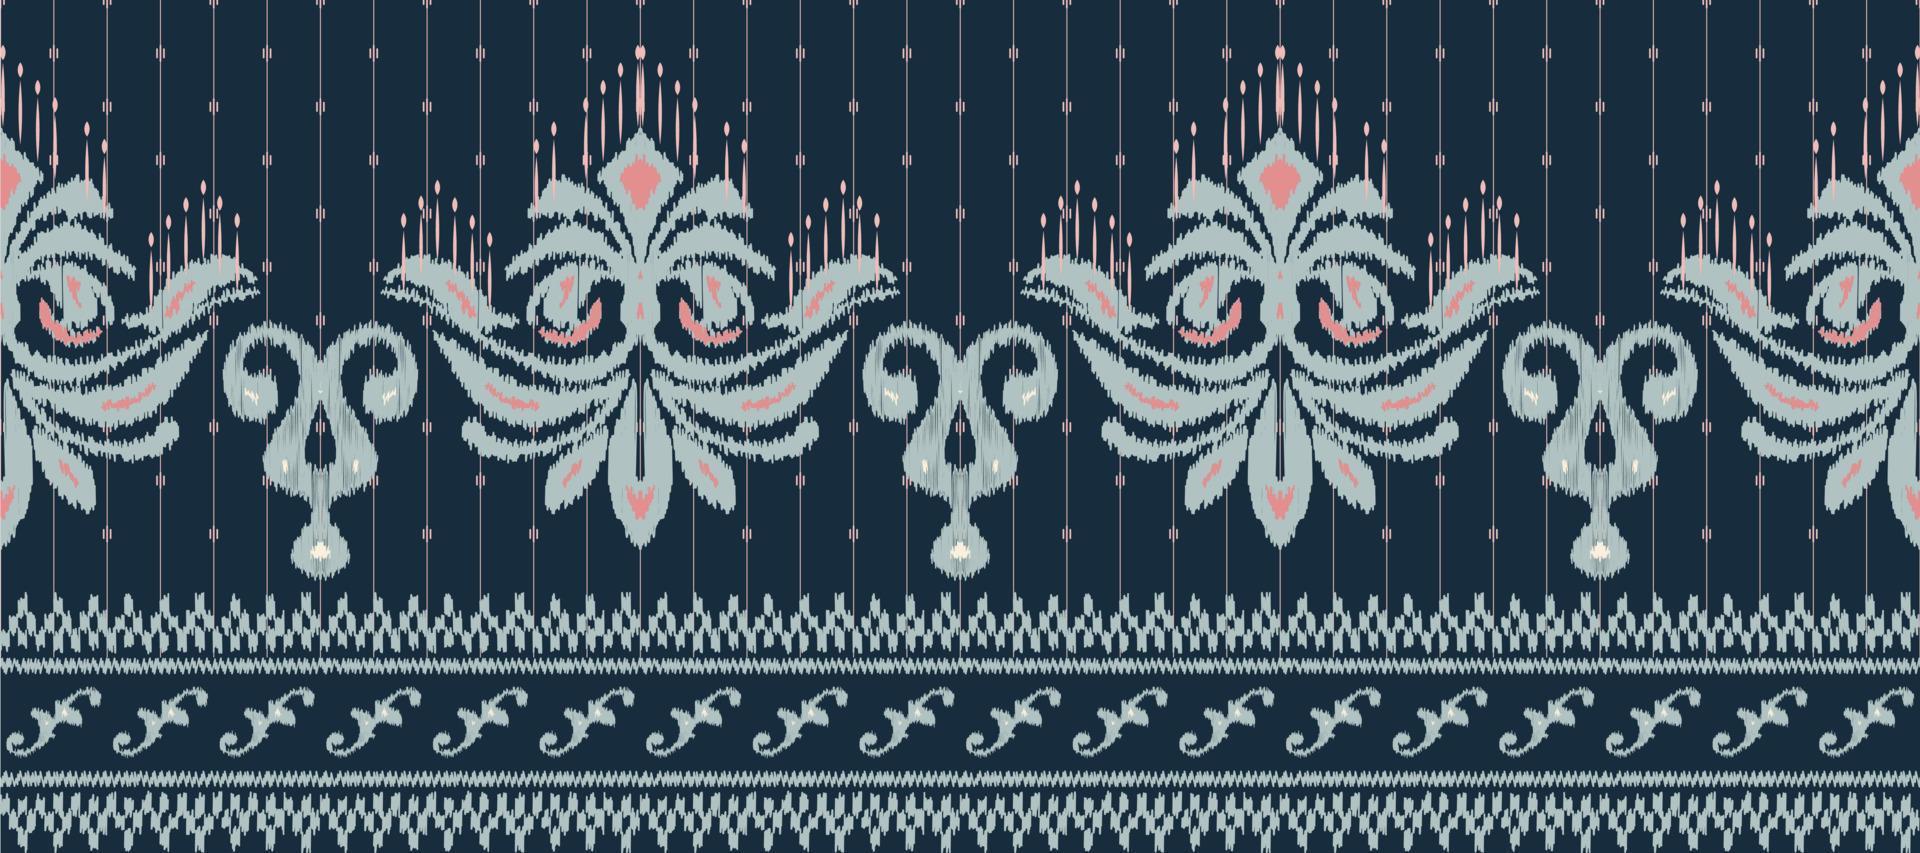 africano ikat cachemir bordado. batik textil motivo ikat sin costura modelo digital vector diseño para impresión sari curti borneo tela frontera ikkat dupatta